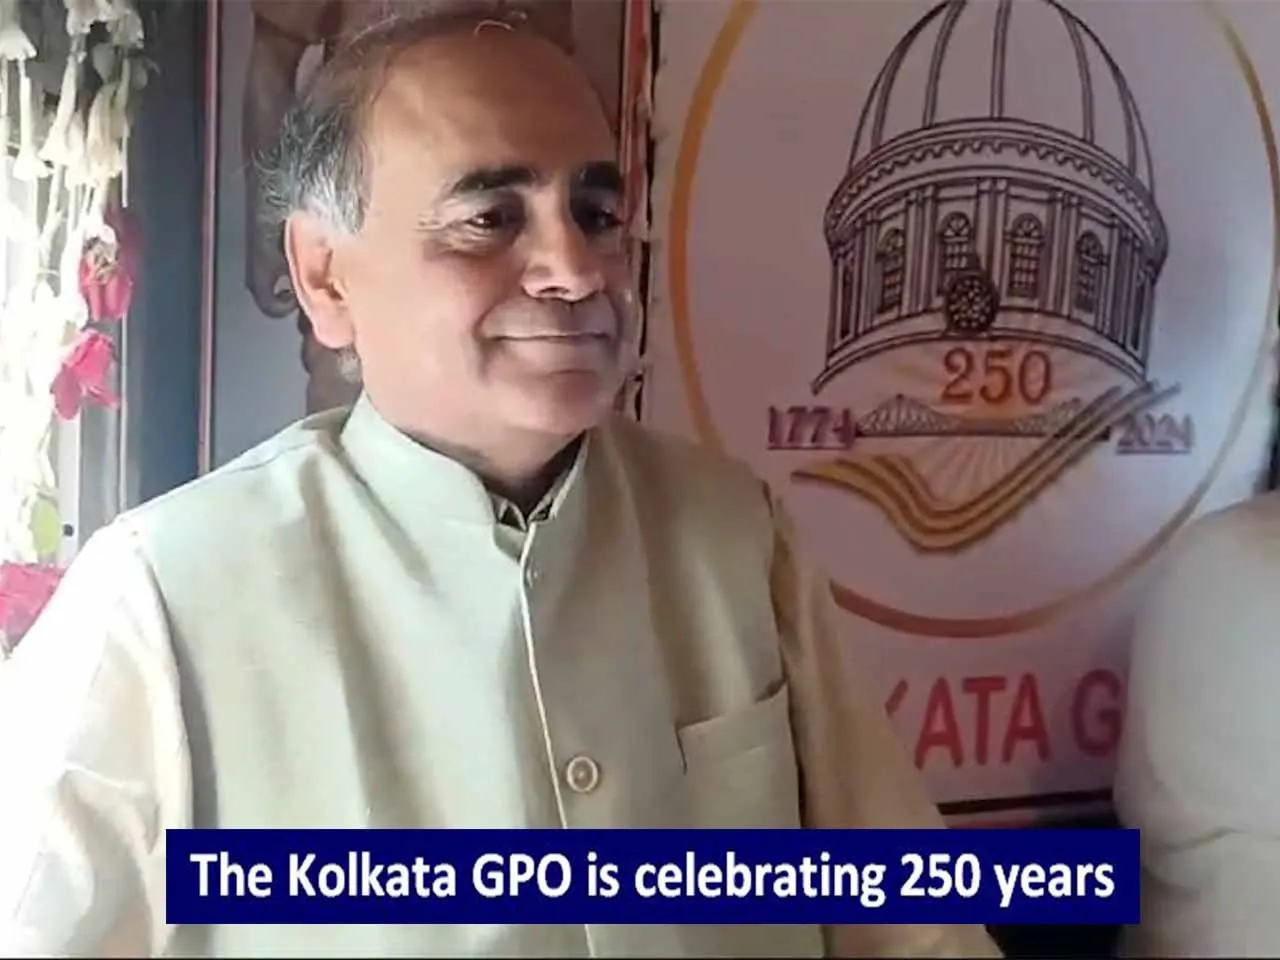 The Kolkata GPO is celebrating 250 years